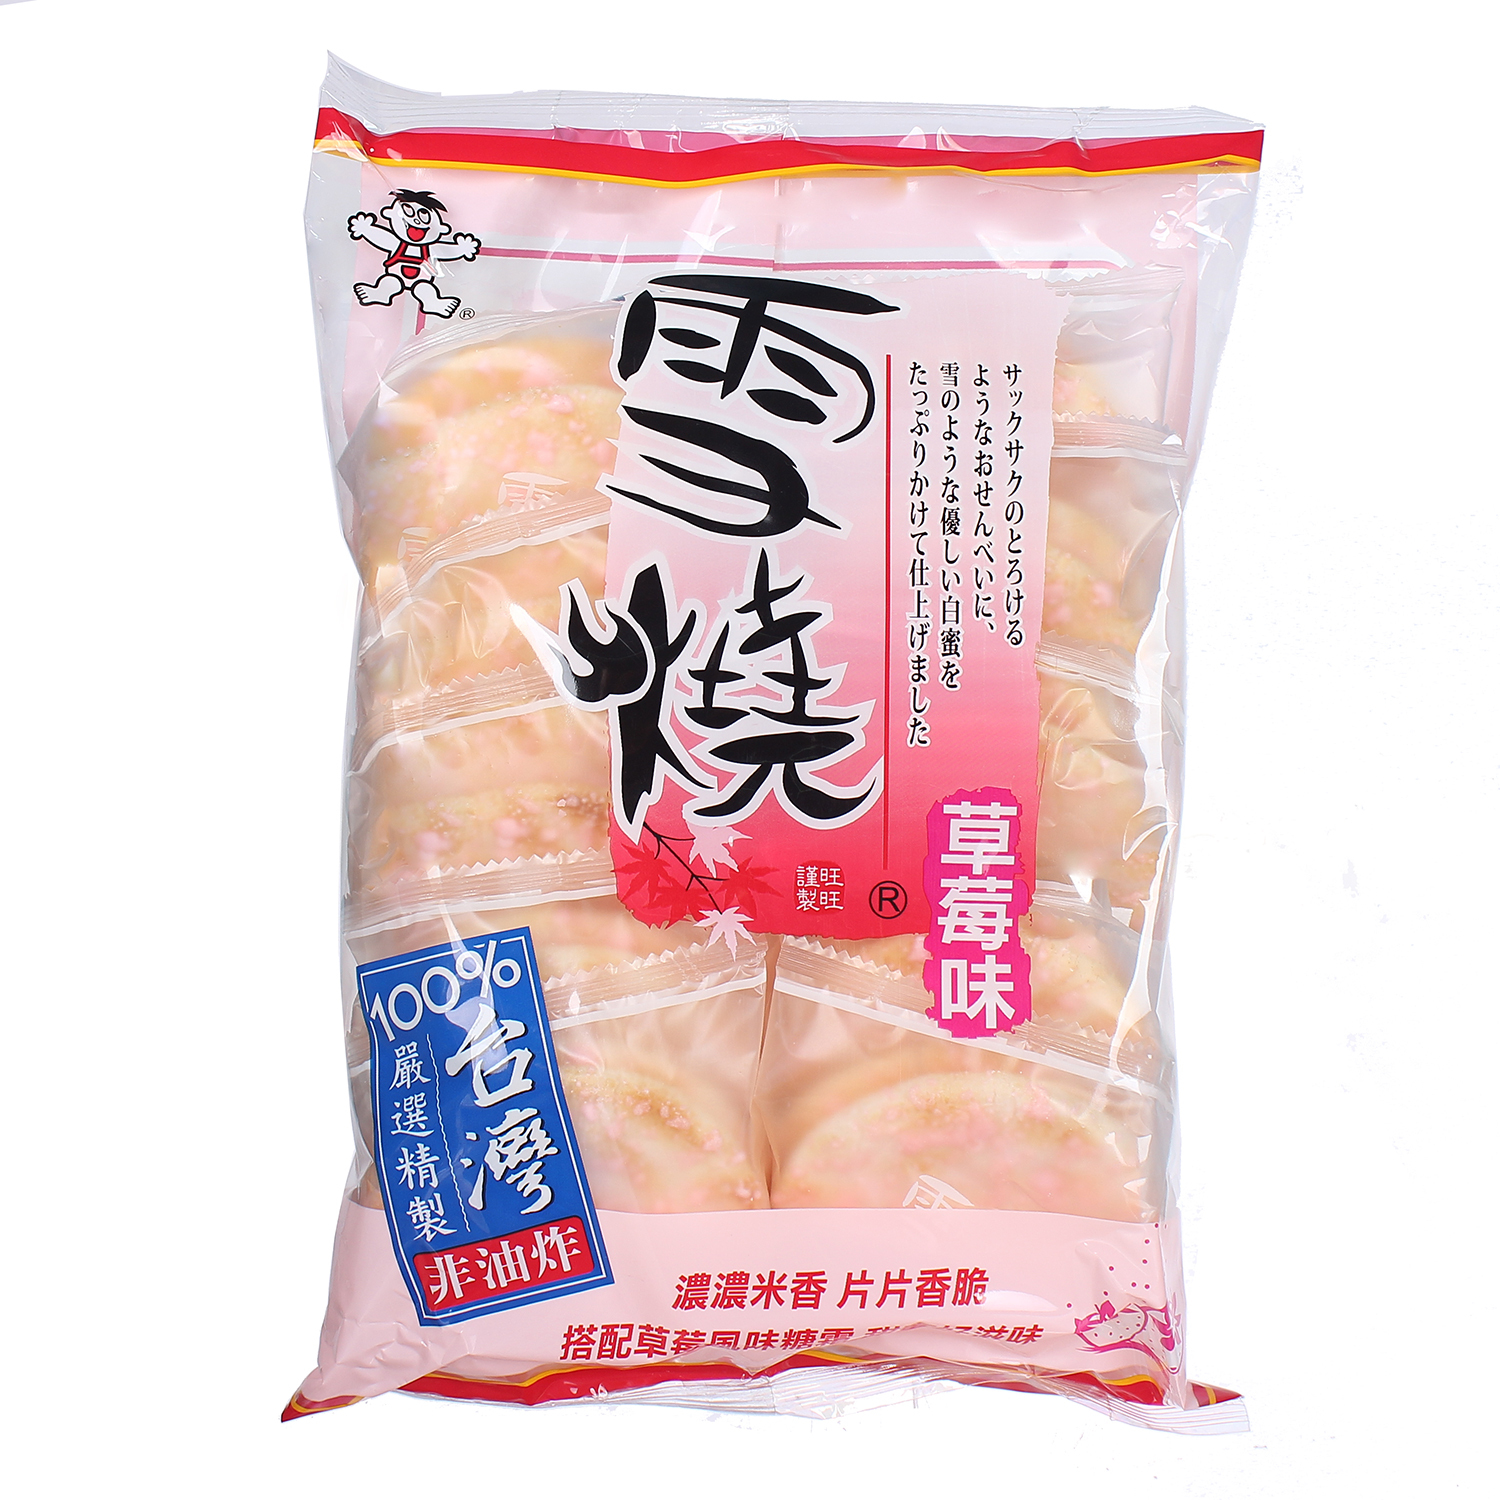 Bánh Gạo Shelly SenBei 170g